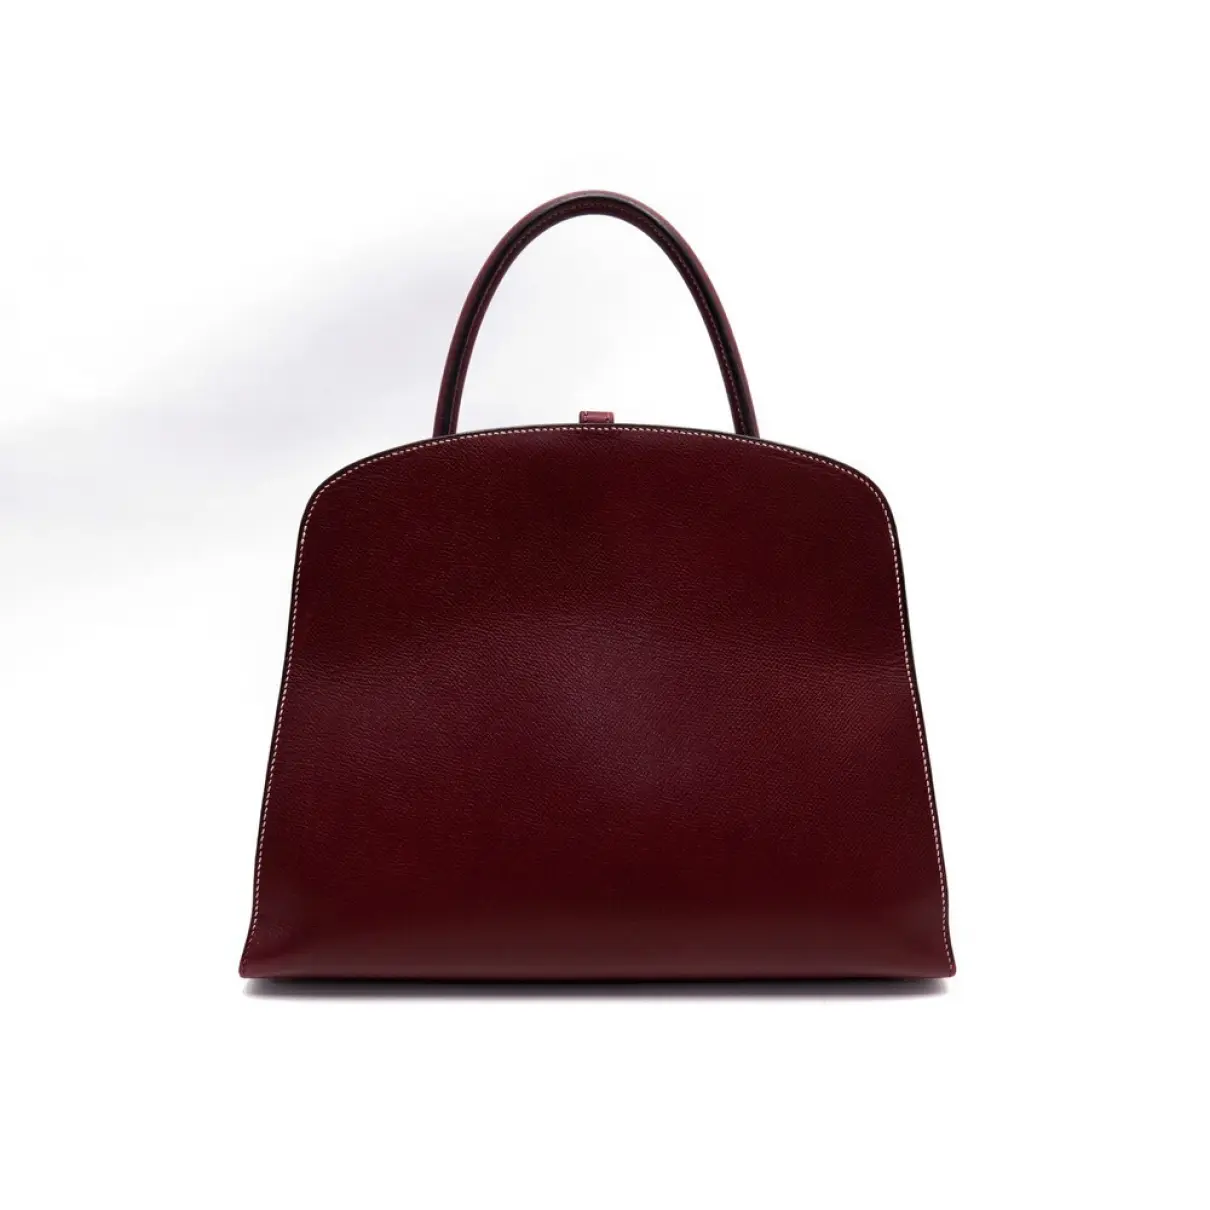 Buy Hermès Dalvy leather handbag online